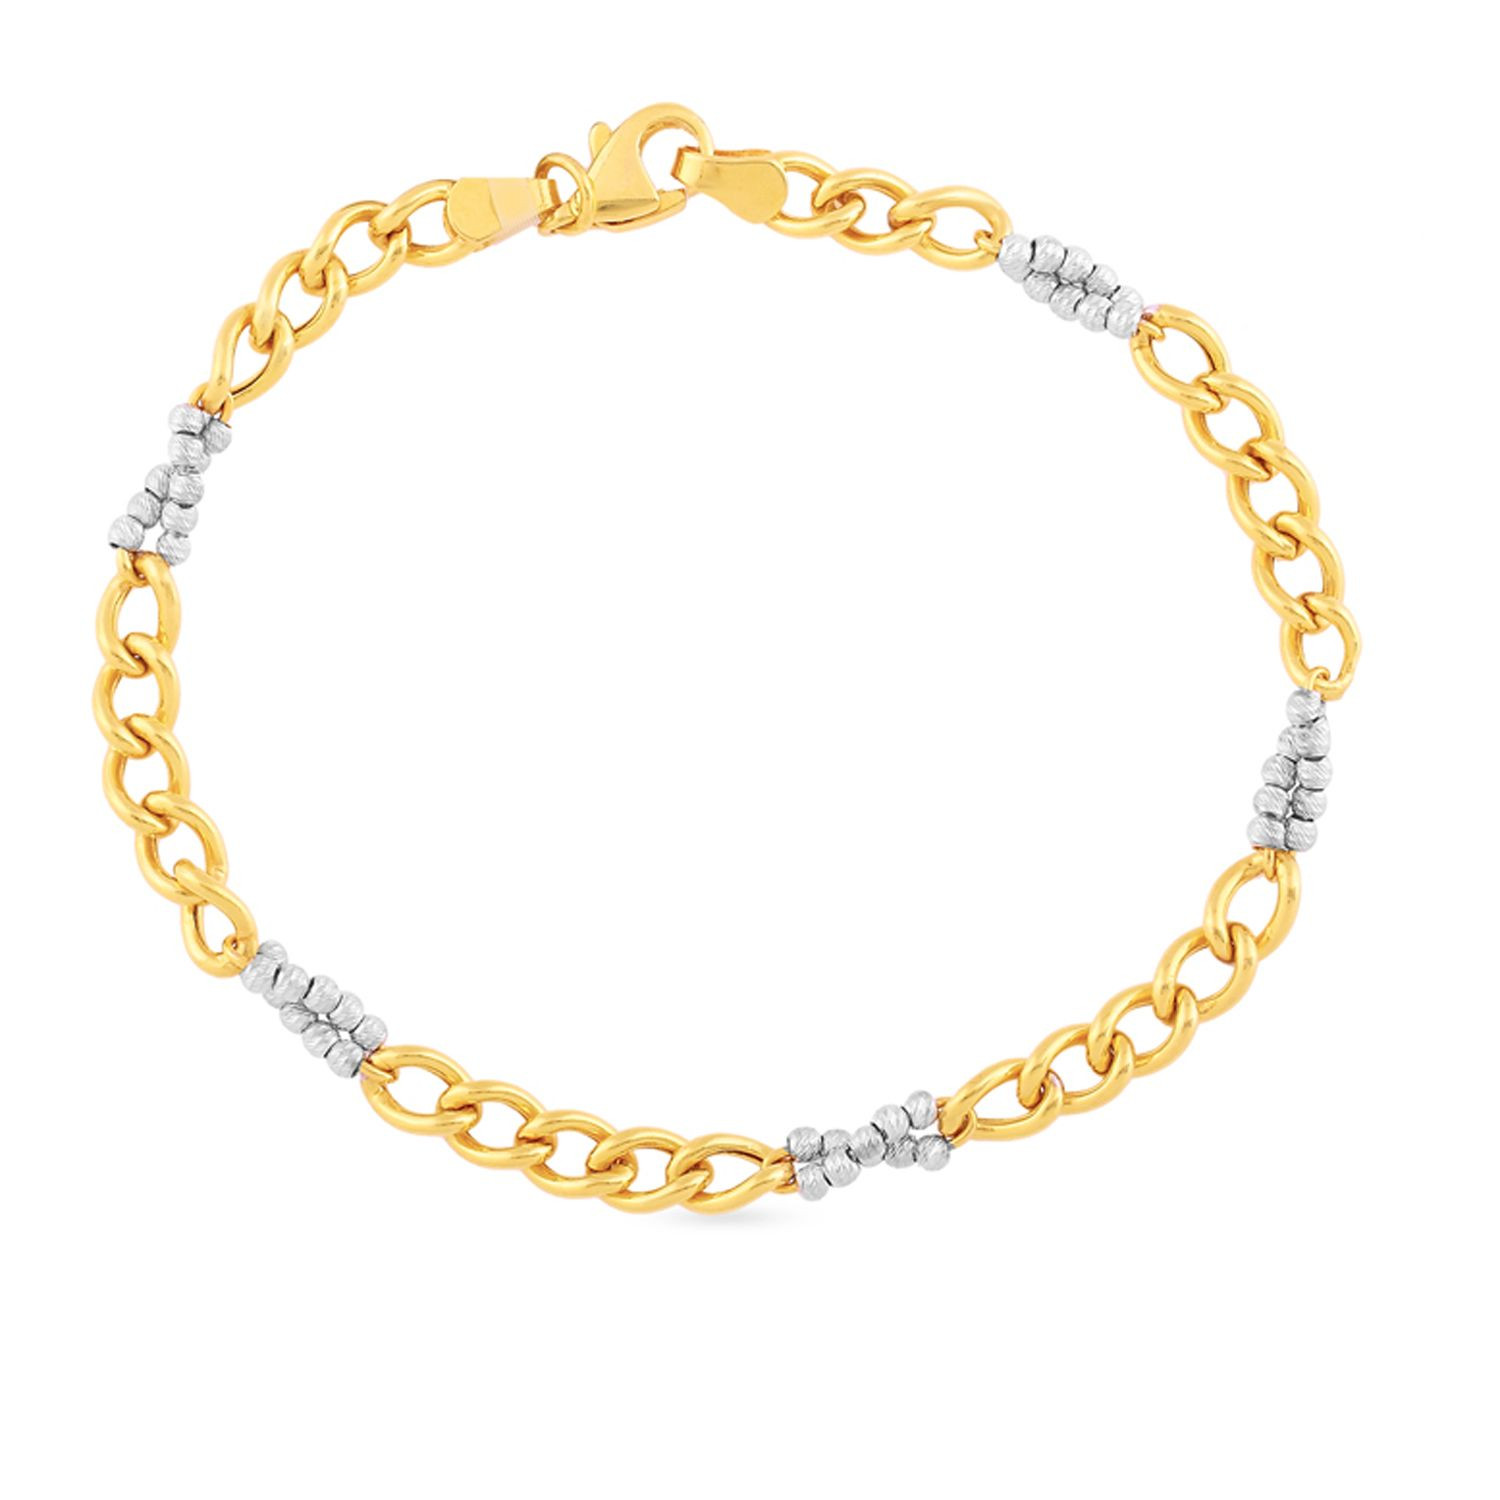 Top 10 Latest Gold Bracelet Design for Men || Hand Bracelets Wedding  Bracelet || | Gold chains for men, Mens gold jewelry, Man gold bracelet  design